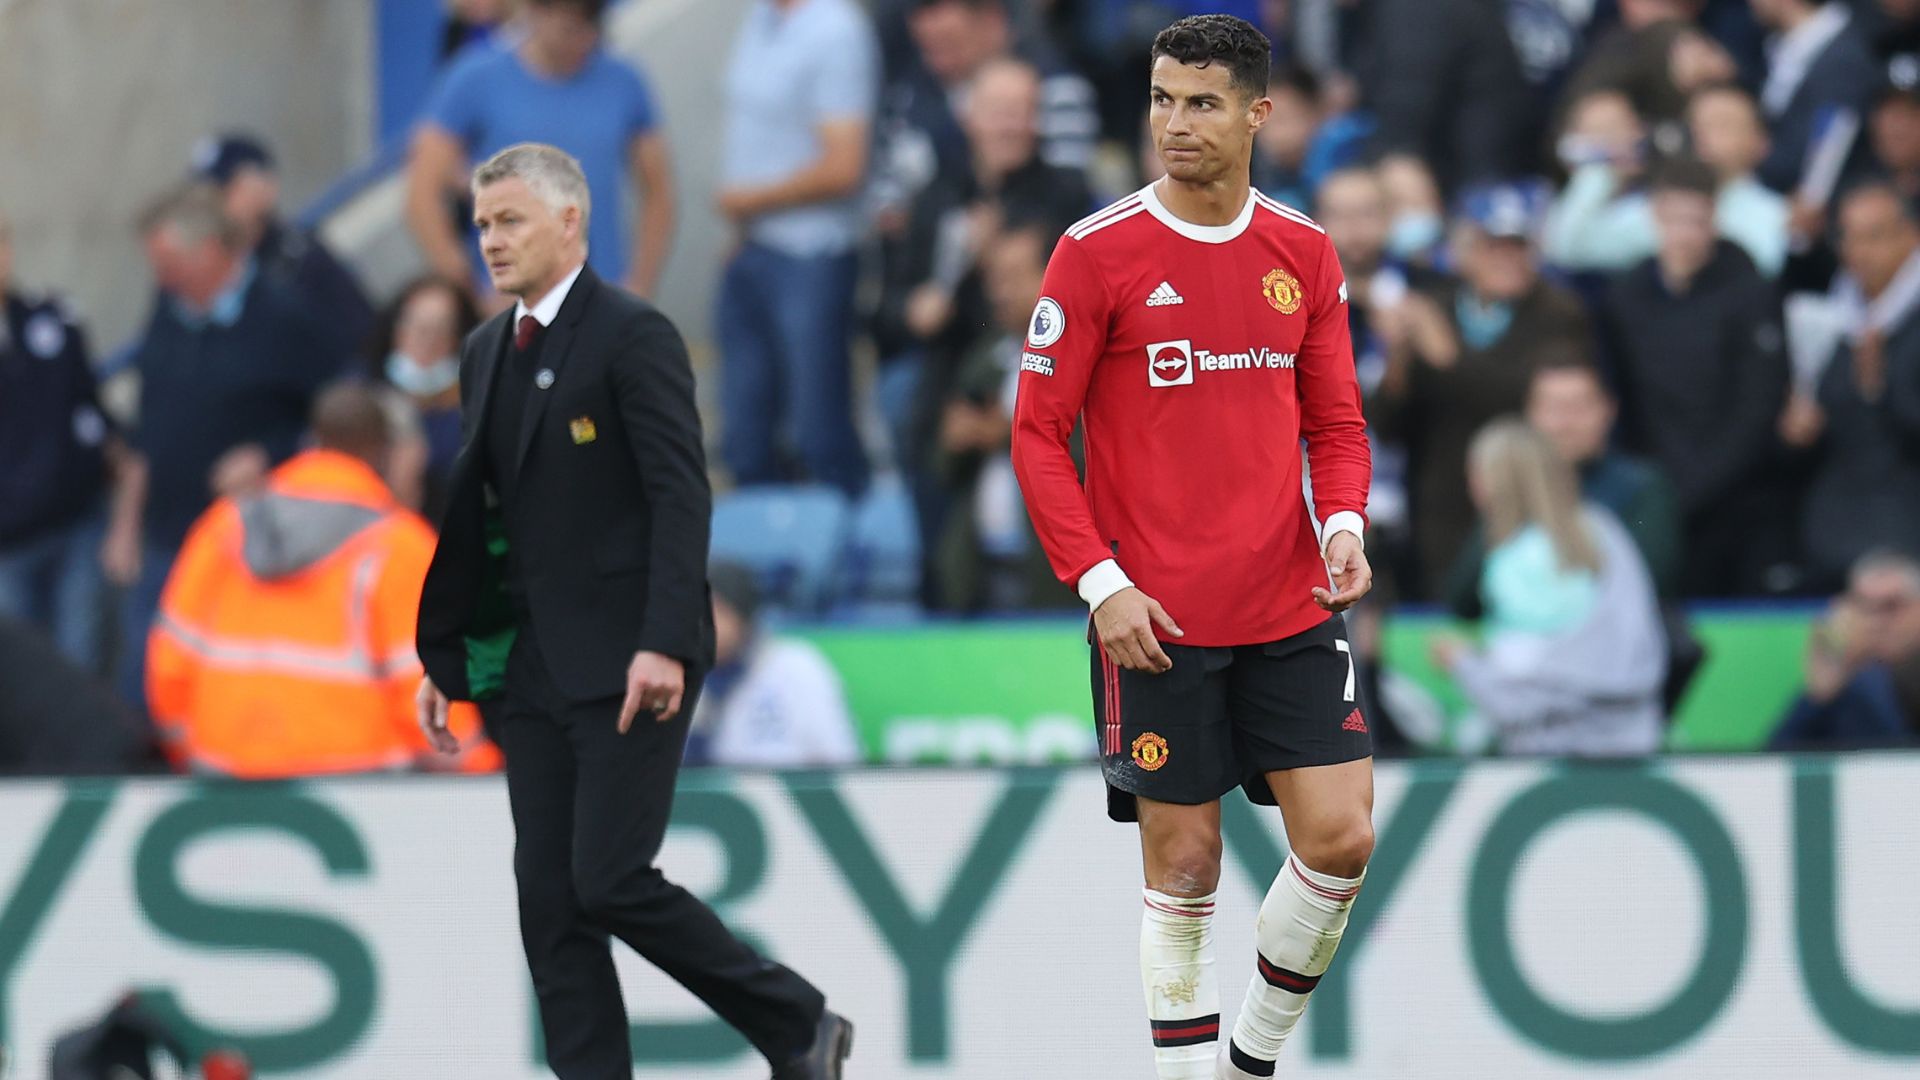 Cristiano Ronaldo and Solskjaer for Manchester United